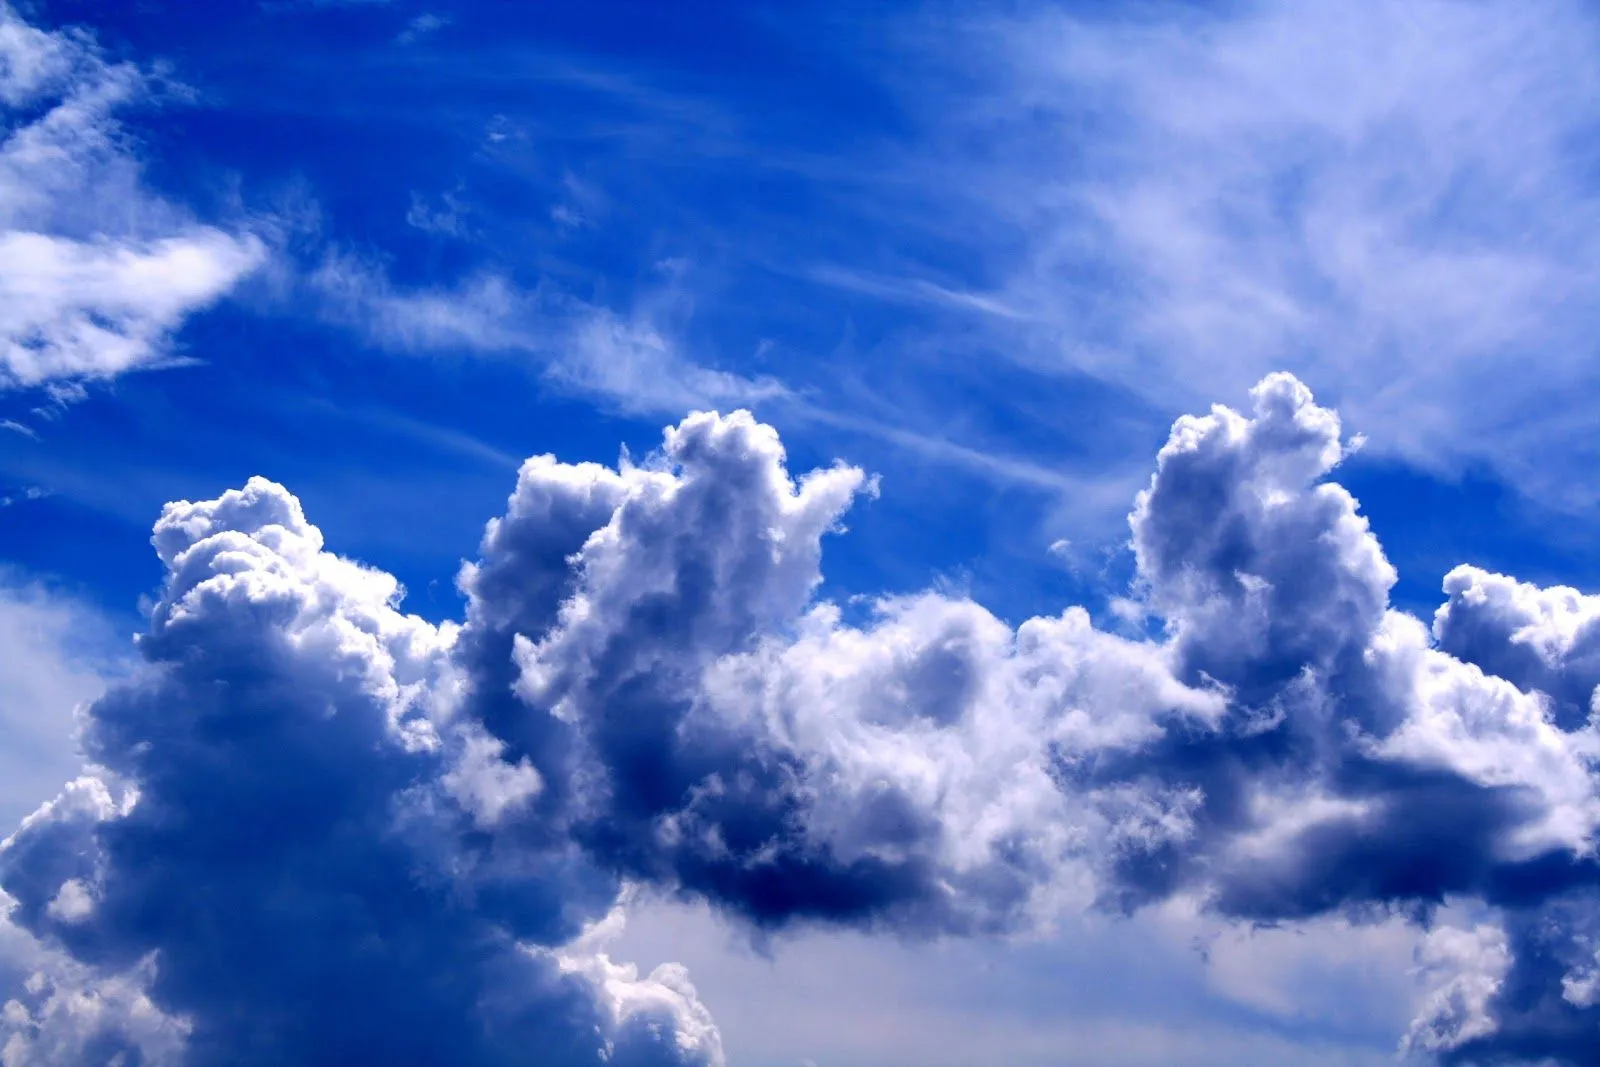 Fotos e Imagenes: Cielo azul con nubes